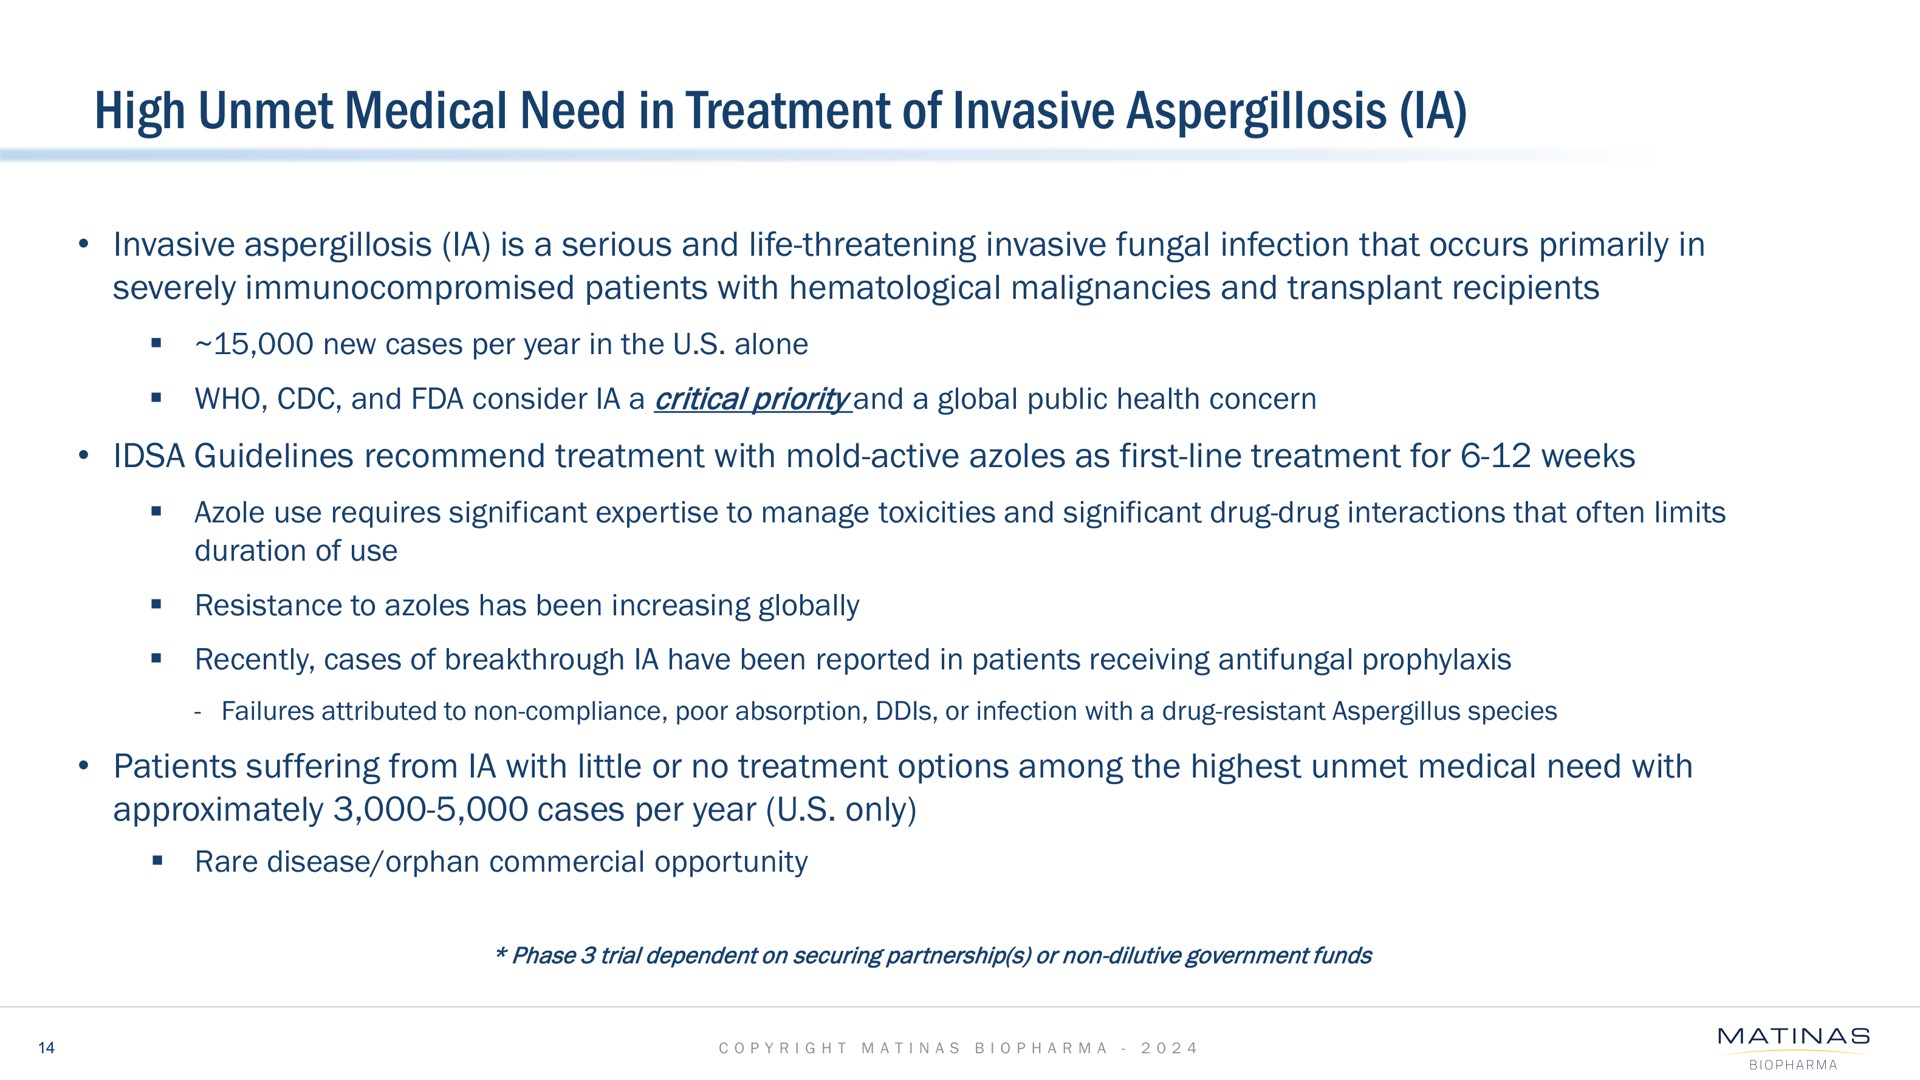 high unmet medical need in treatment of invasive aspergillosis | Matinas BioPharma